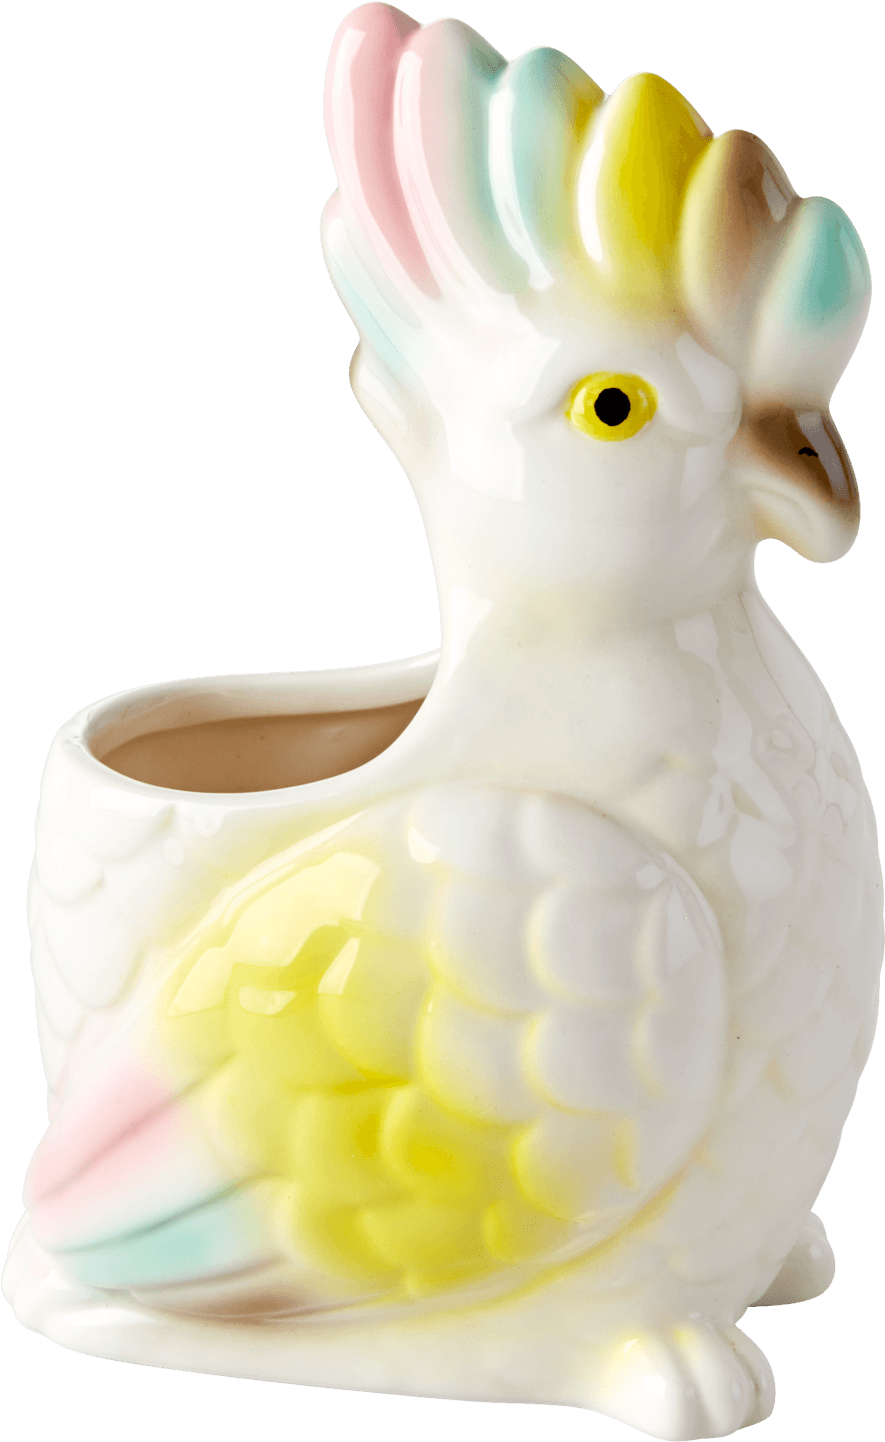 A White Ceramic Bird Shaped Vase